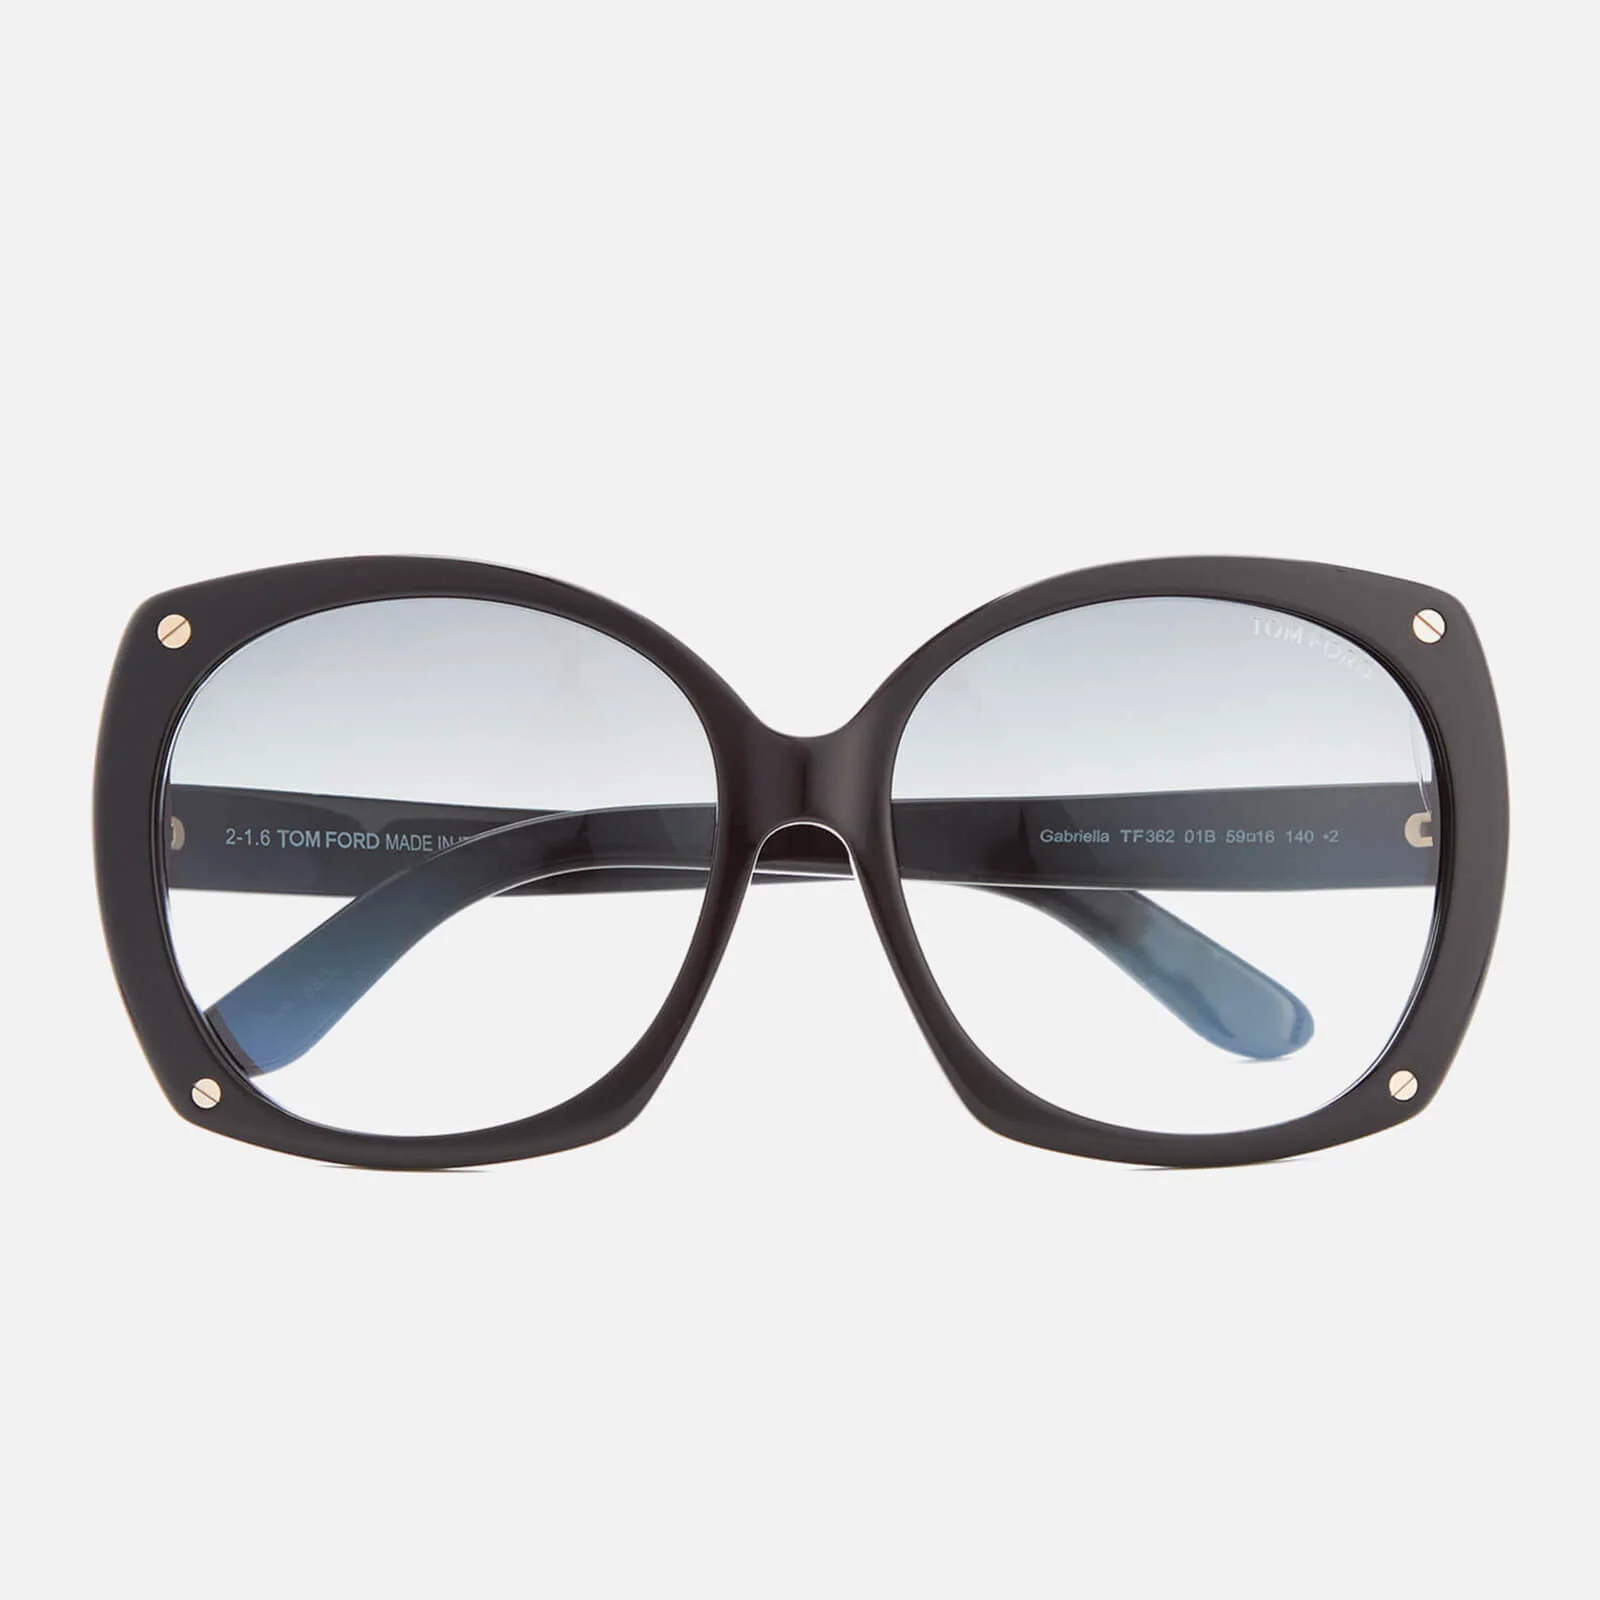 Tom Ford Women's Gabriella Sunglasses - Black Image 1